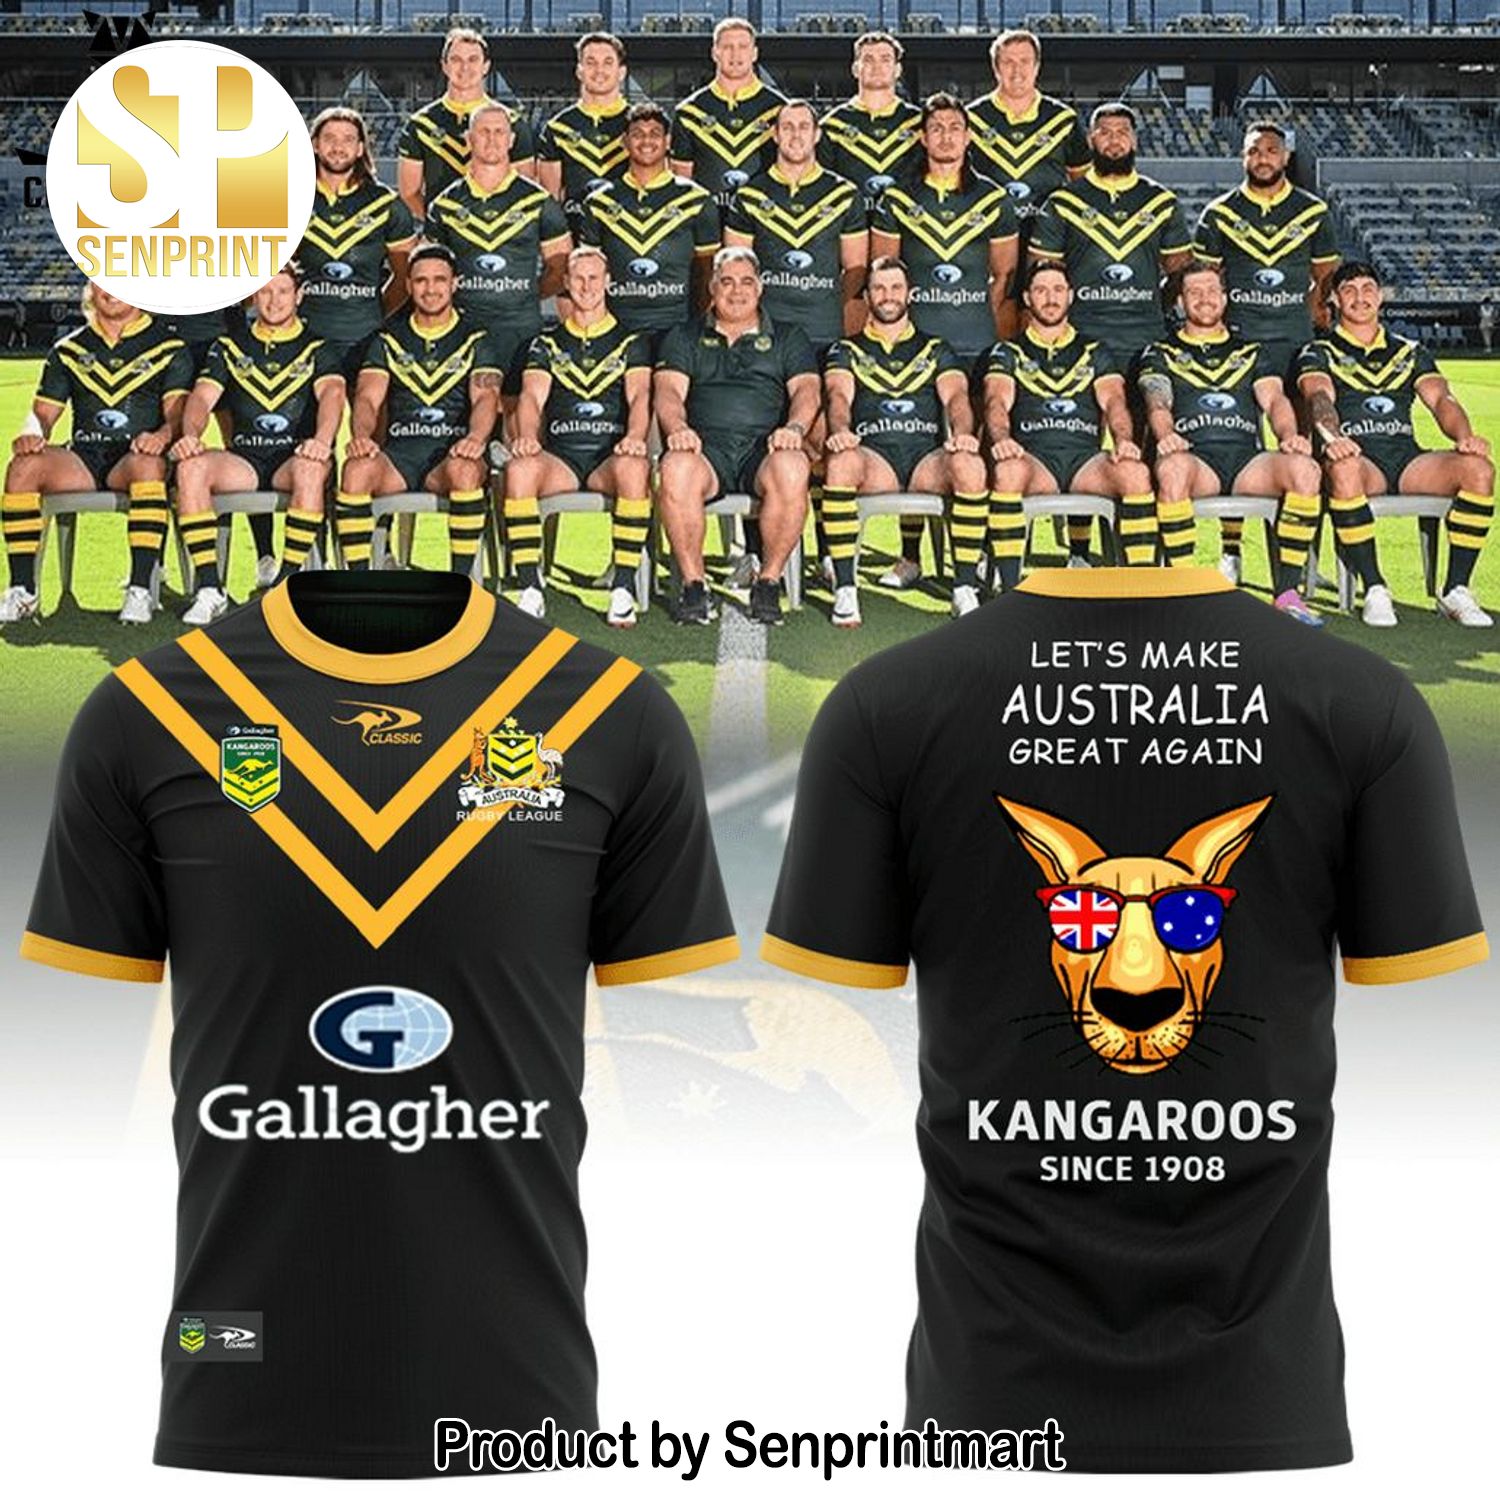 Australian Kangaroos Since 1908 Pacific Rugby League Championships Logo Black Full Printing 3D Shirt